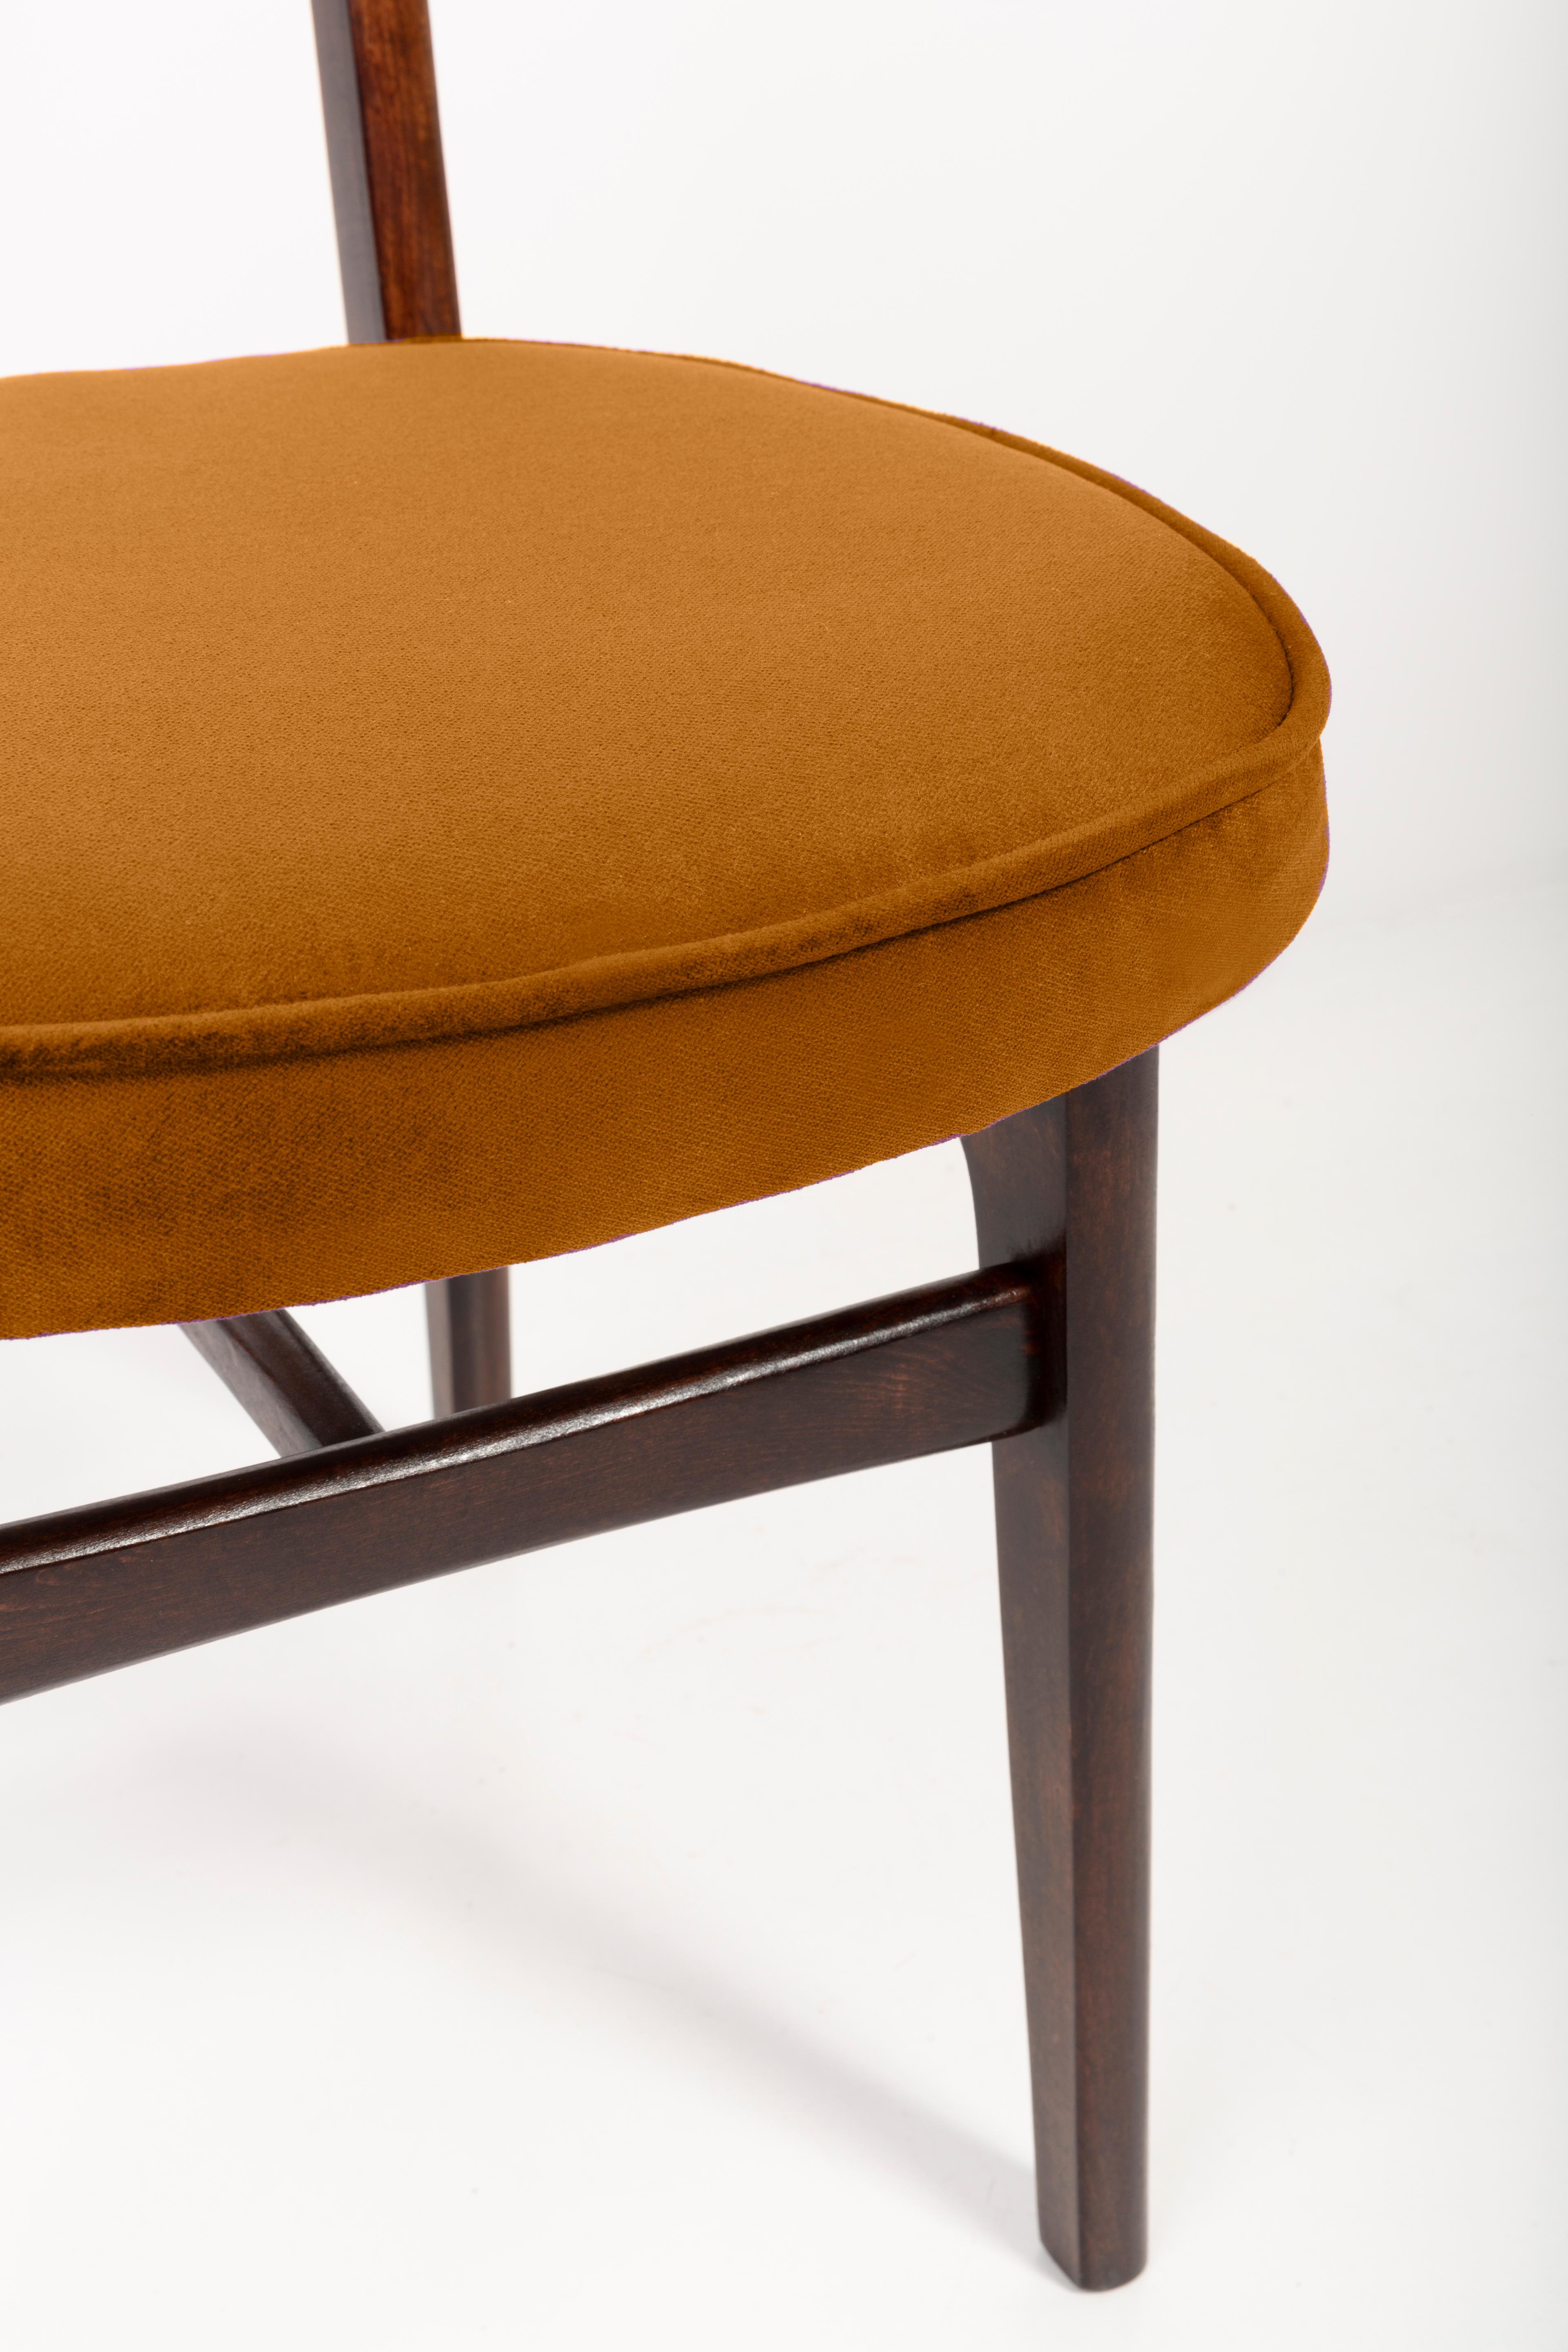 Textile Eight 20th Century Copper Velvet Rajmund Halas Chairs, Europe, 1960s For Sale